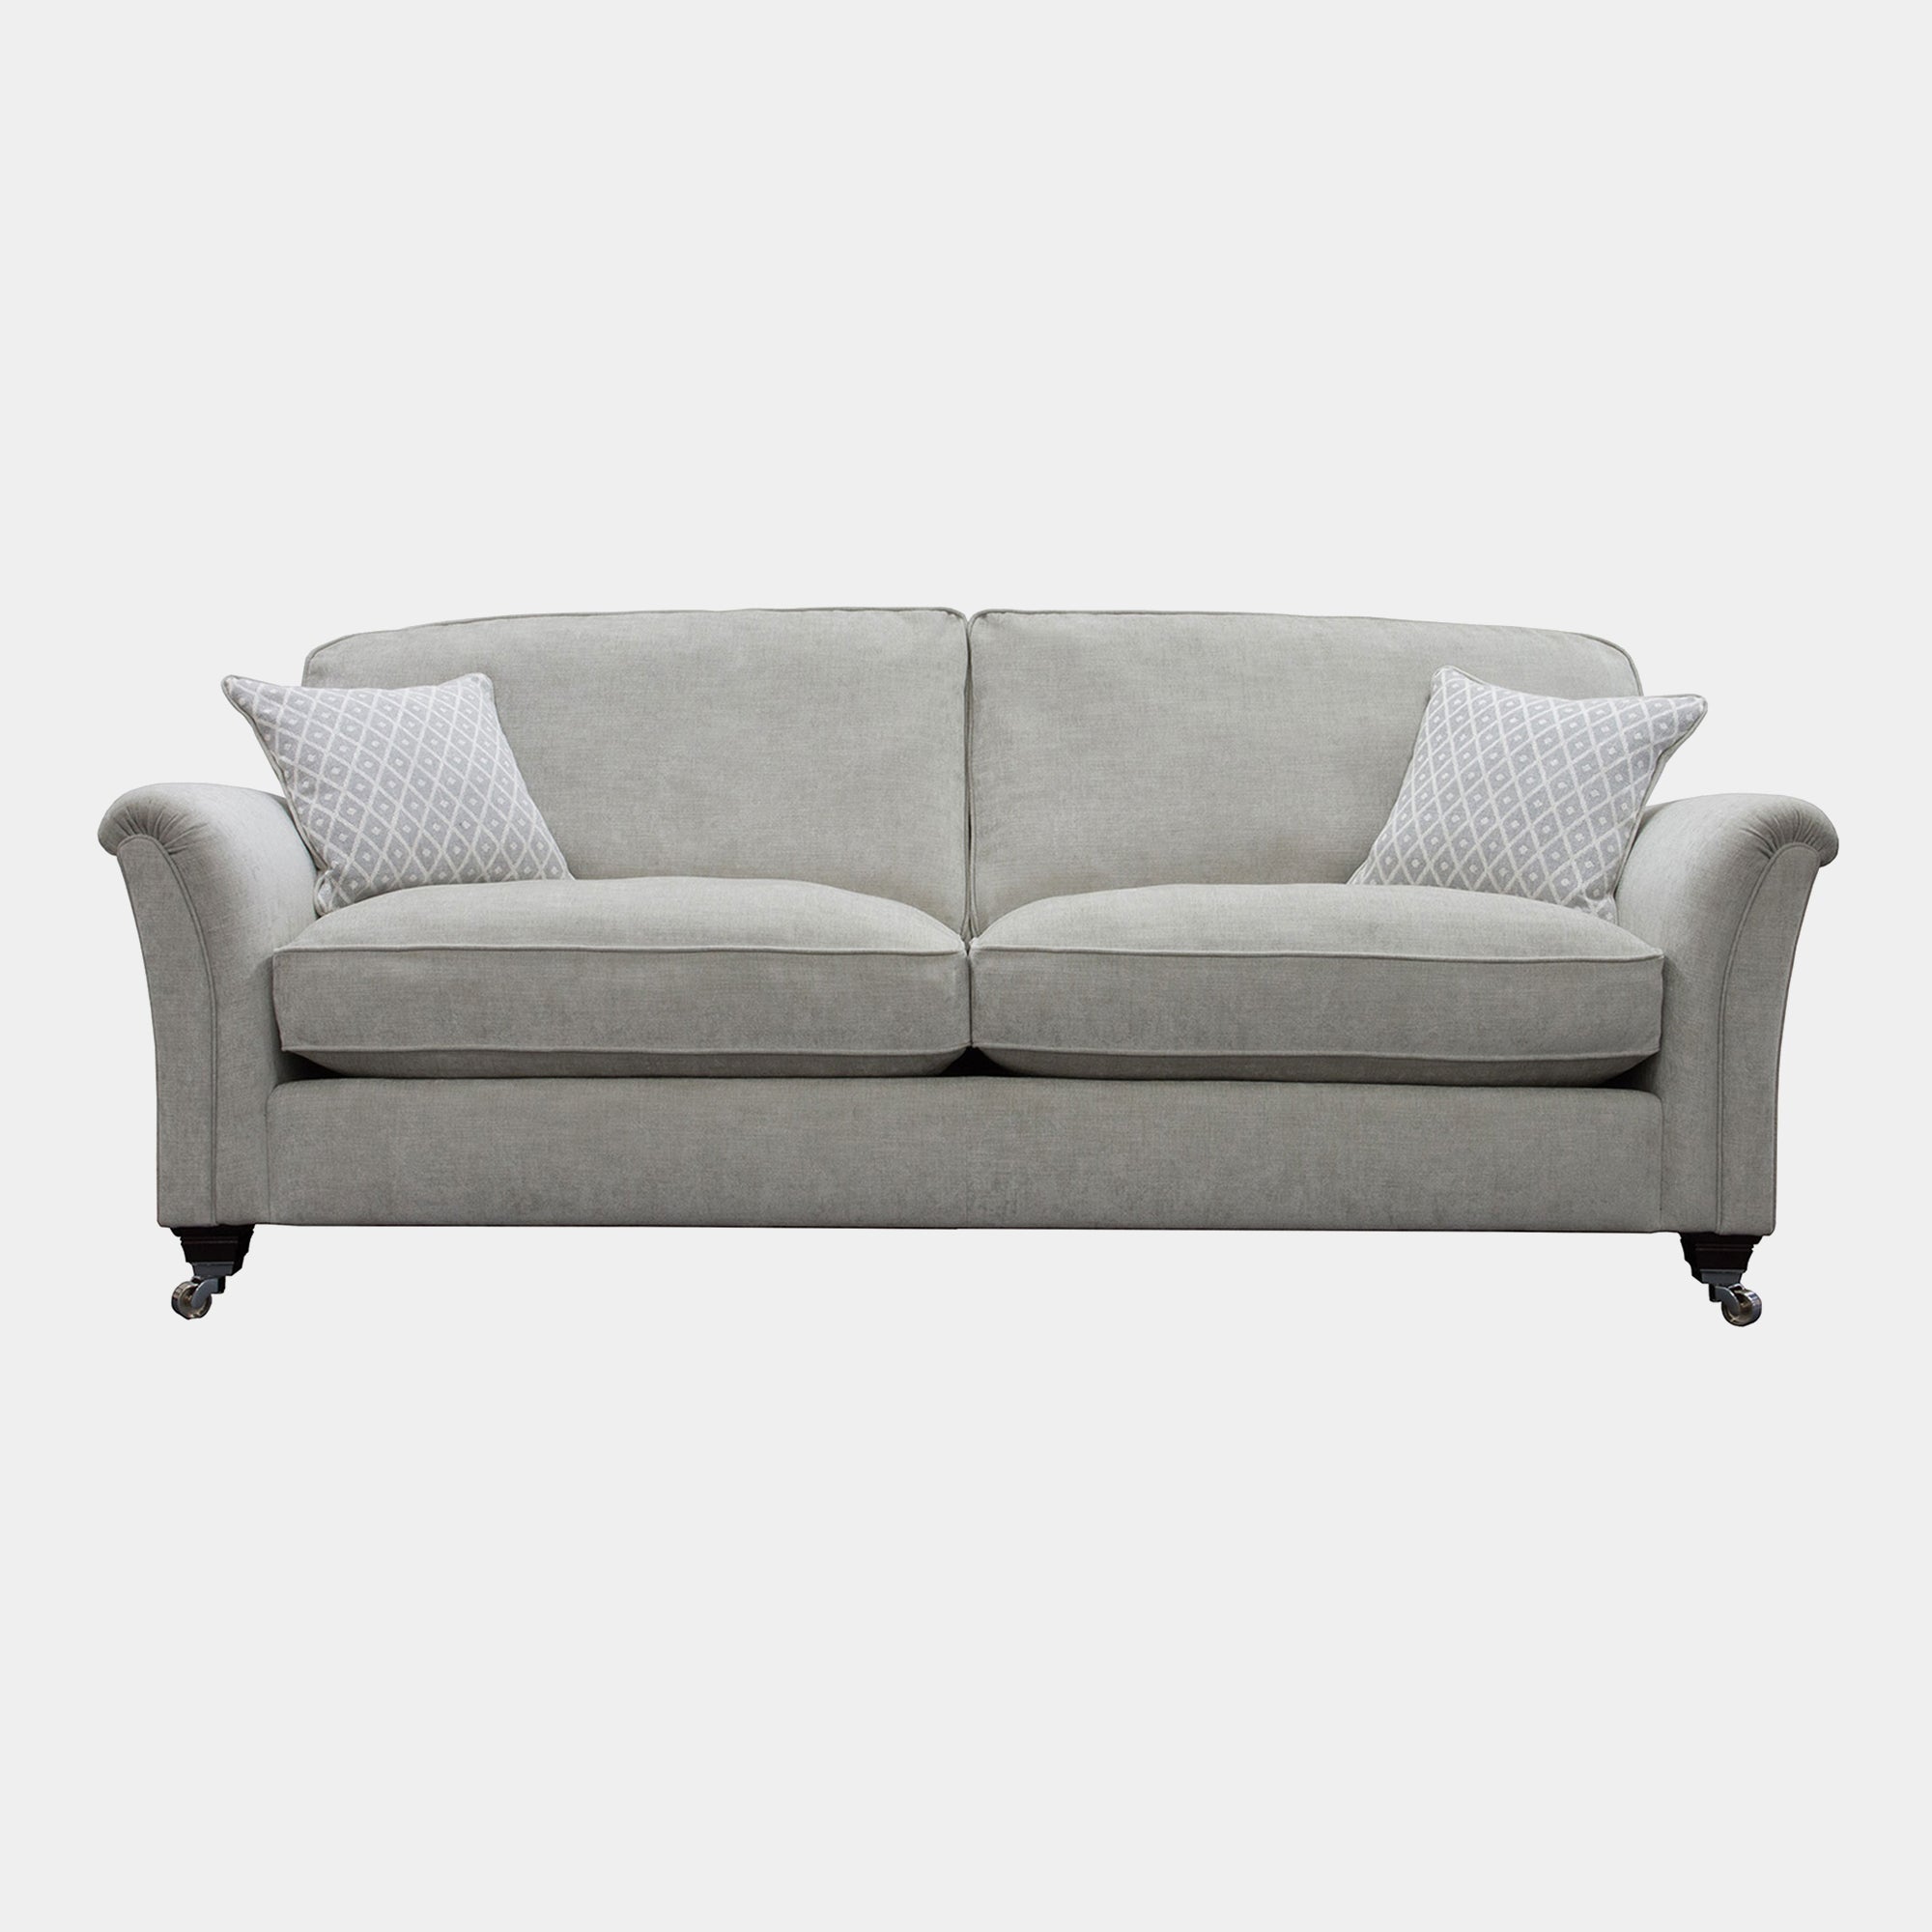 Parker Knoll Devonshire - Formal Back Grand Sofa In Grade A Fabric